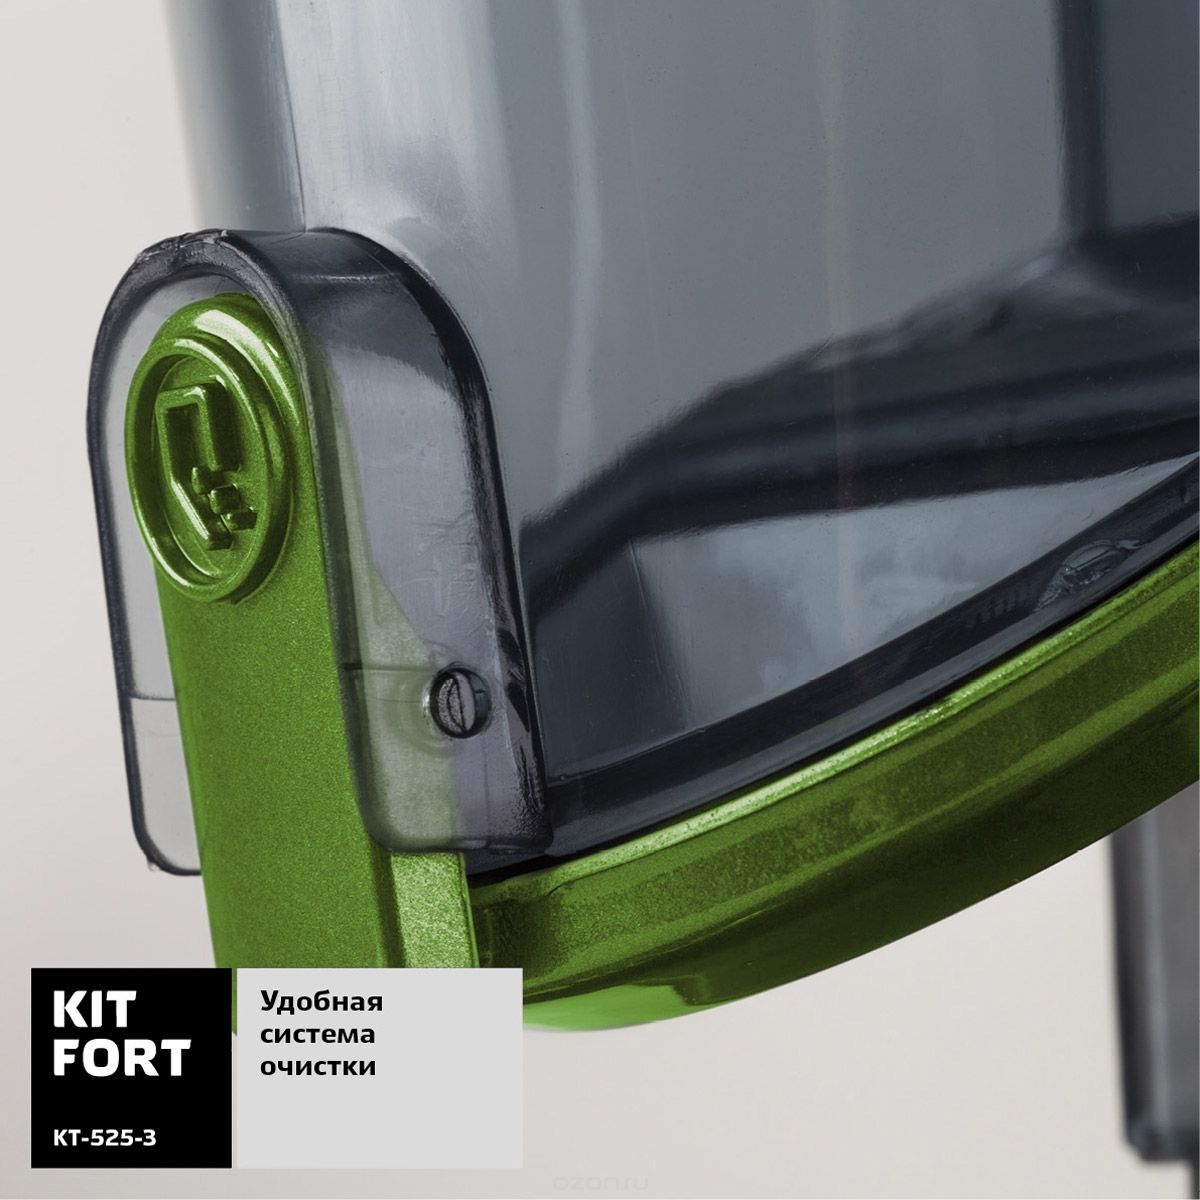   Kitfort -525, Green